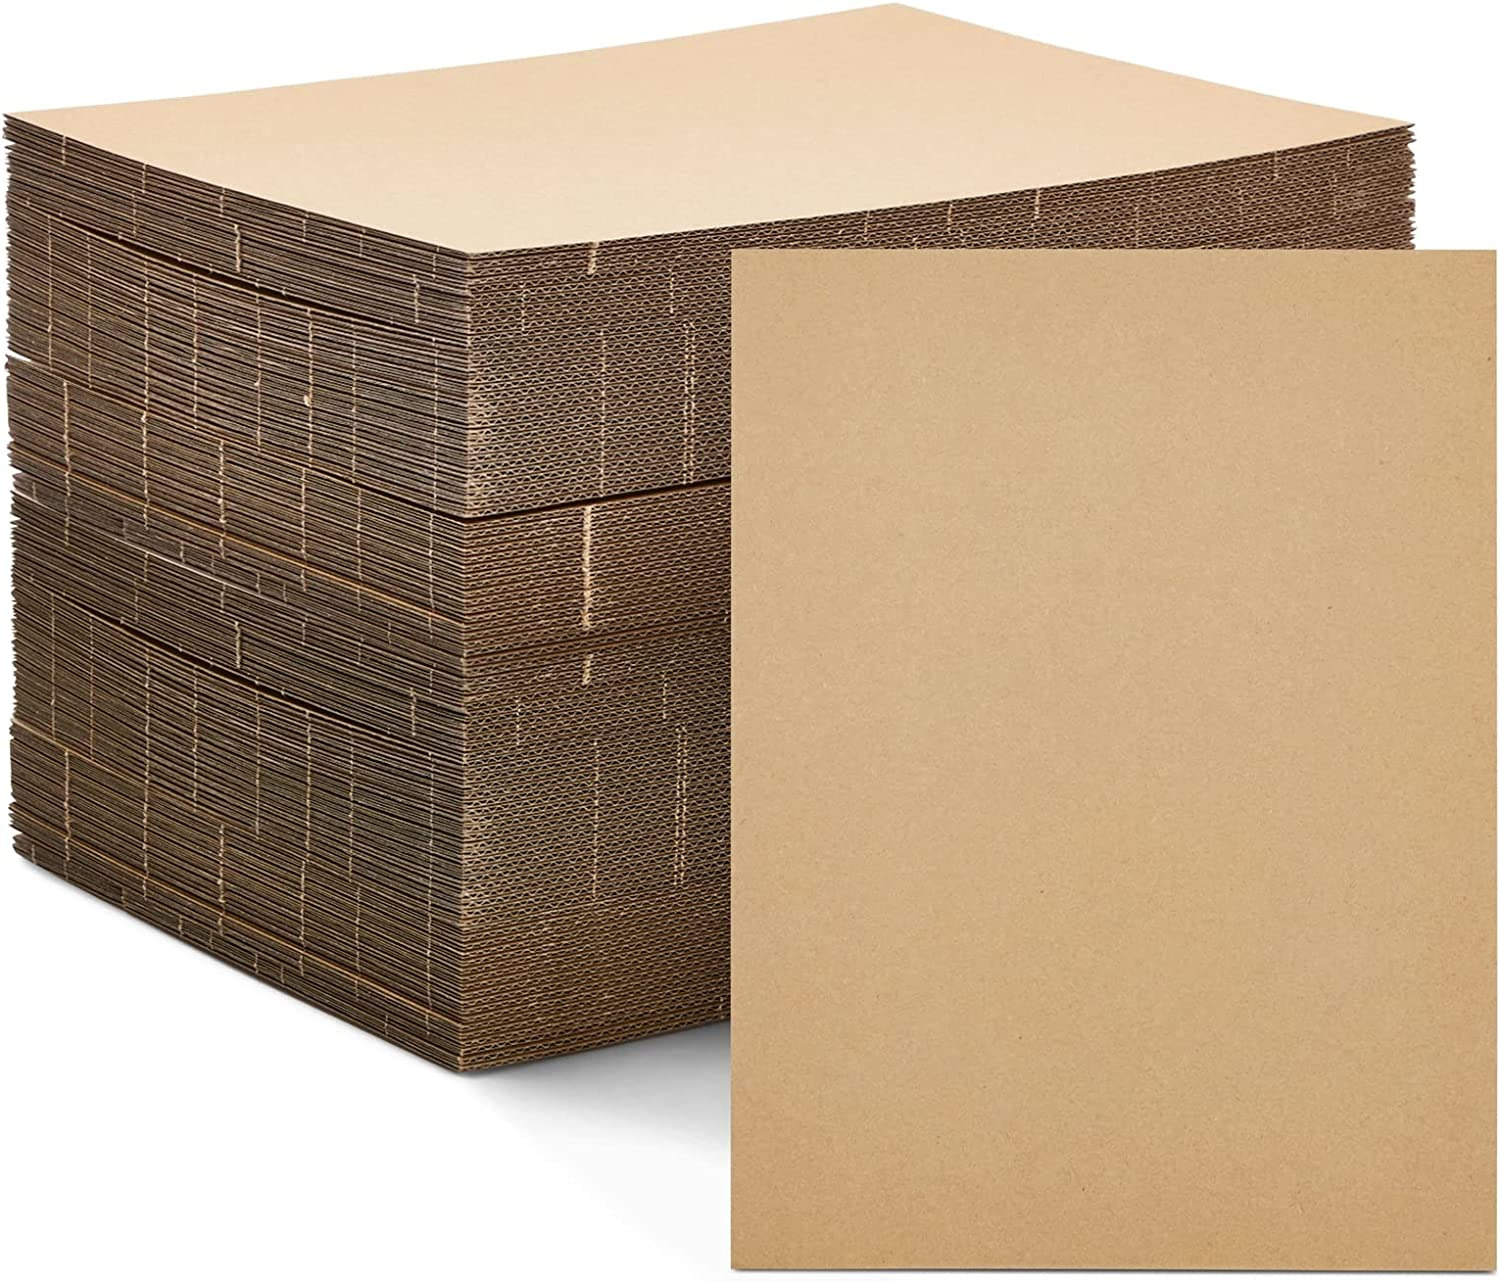 50 Pack Corrugated Packaging Pads Craft Cardboard Sheets Bulk Flat